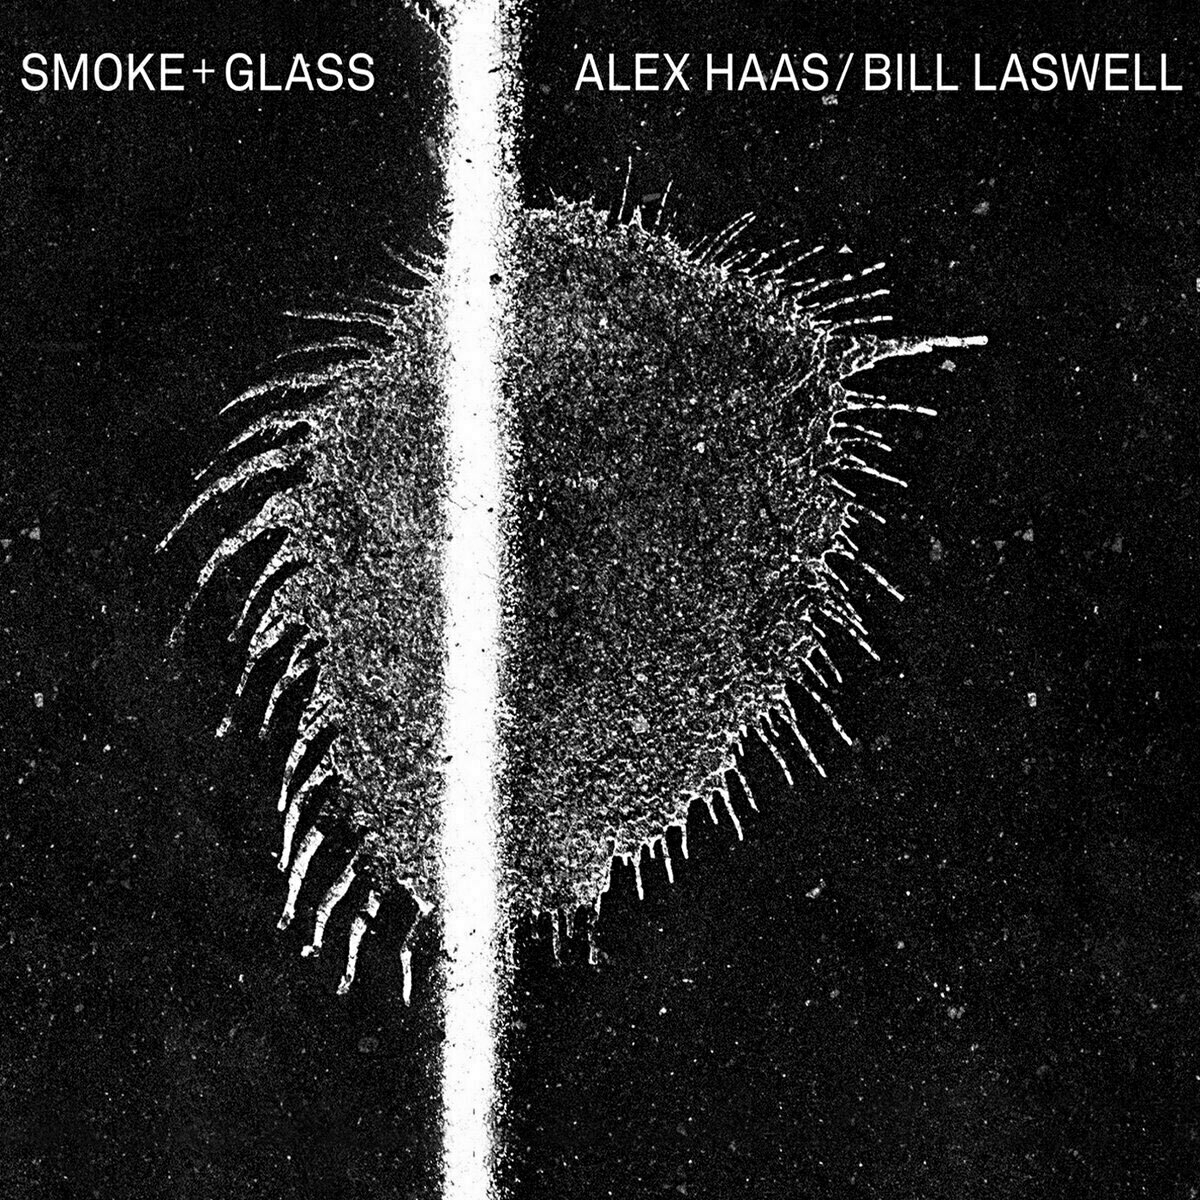 Album cover: Alex Haas & Bill Laswell, Smoke + Glass